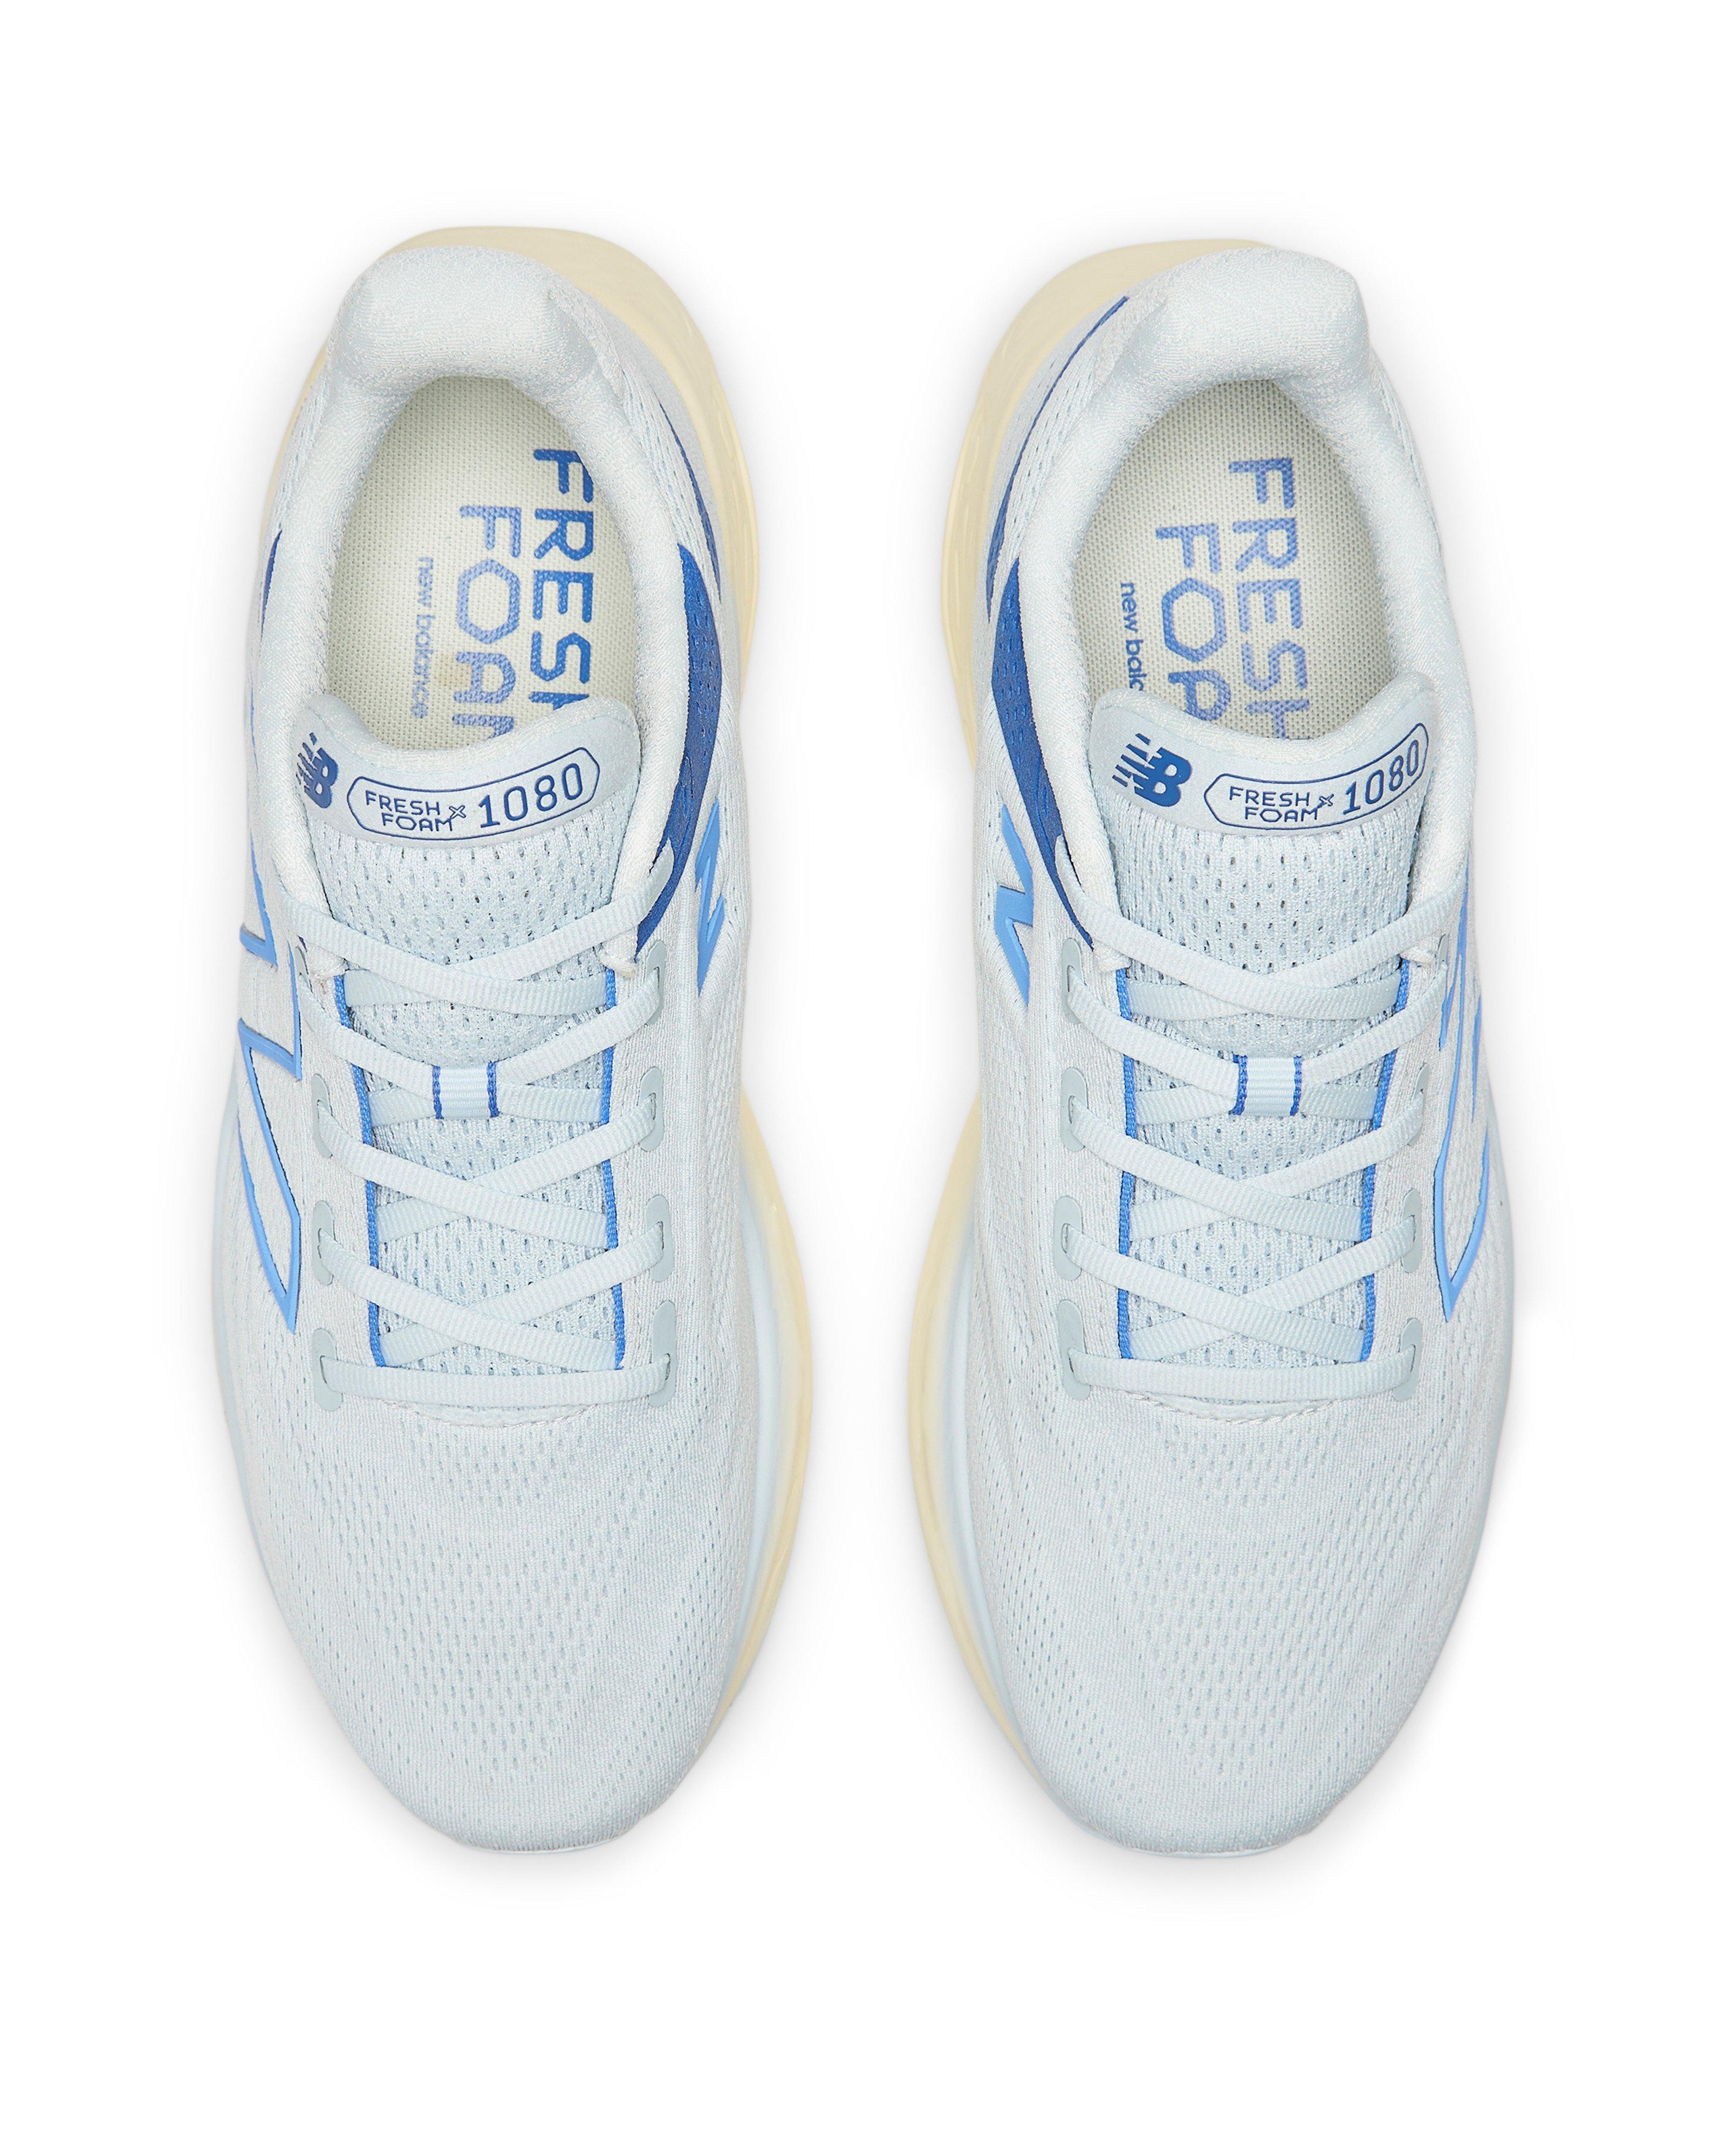 New Balance Women’s Fresh Foam X 1080 v13 Road Running Shoes -  Light Blue